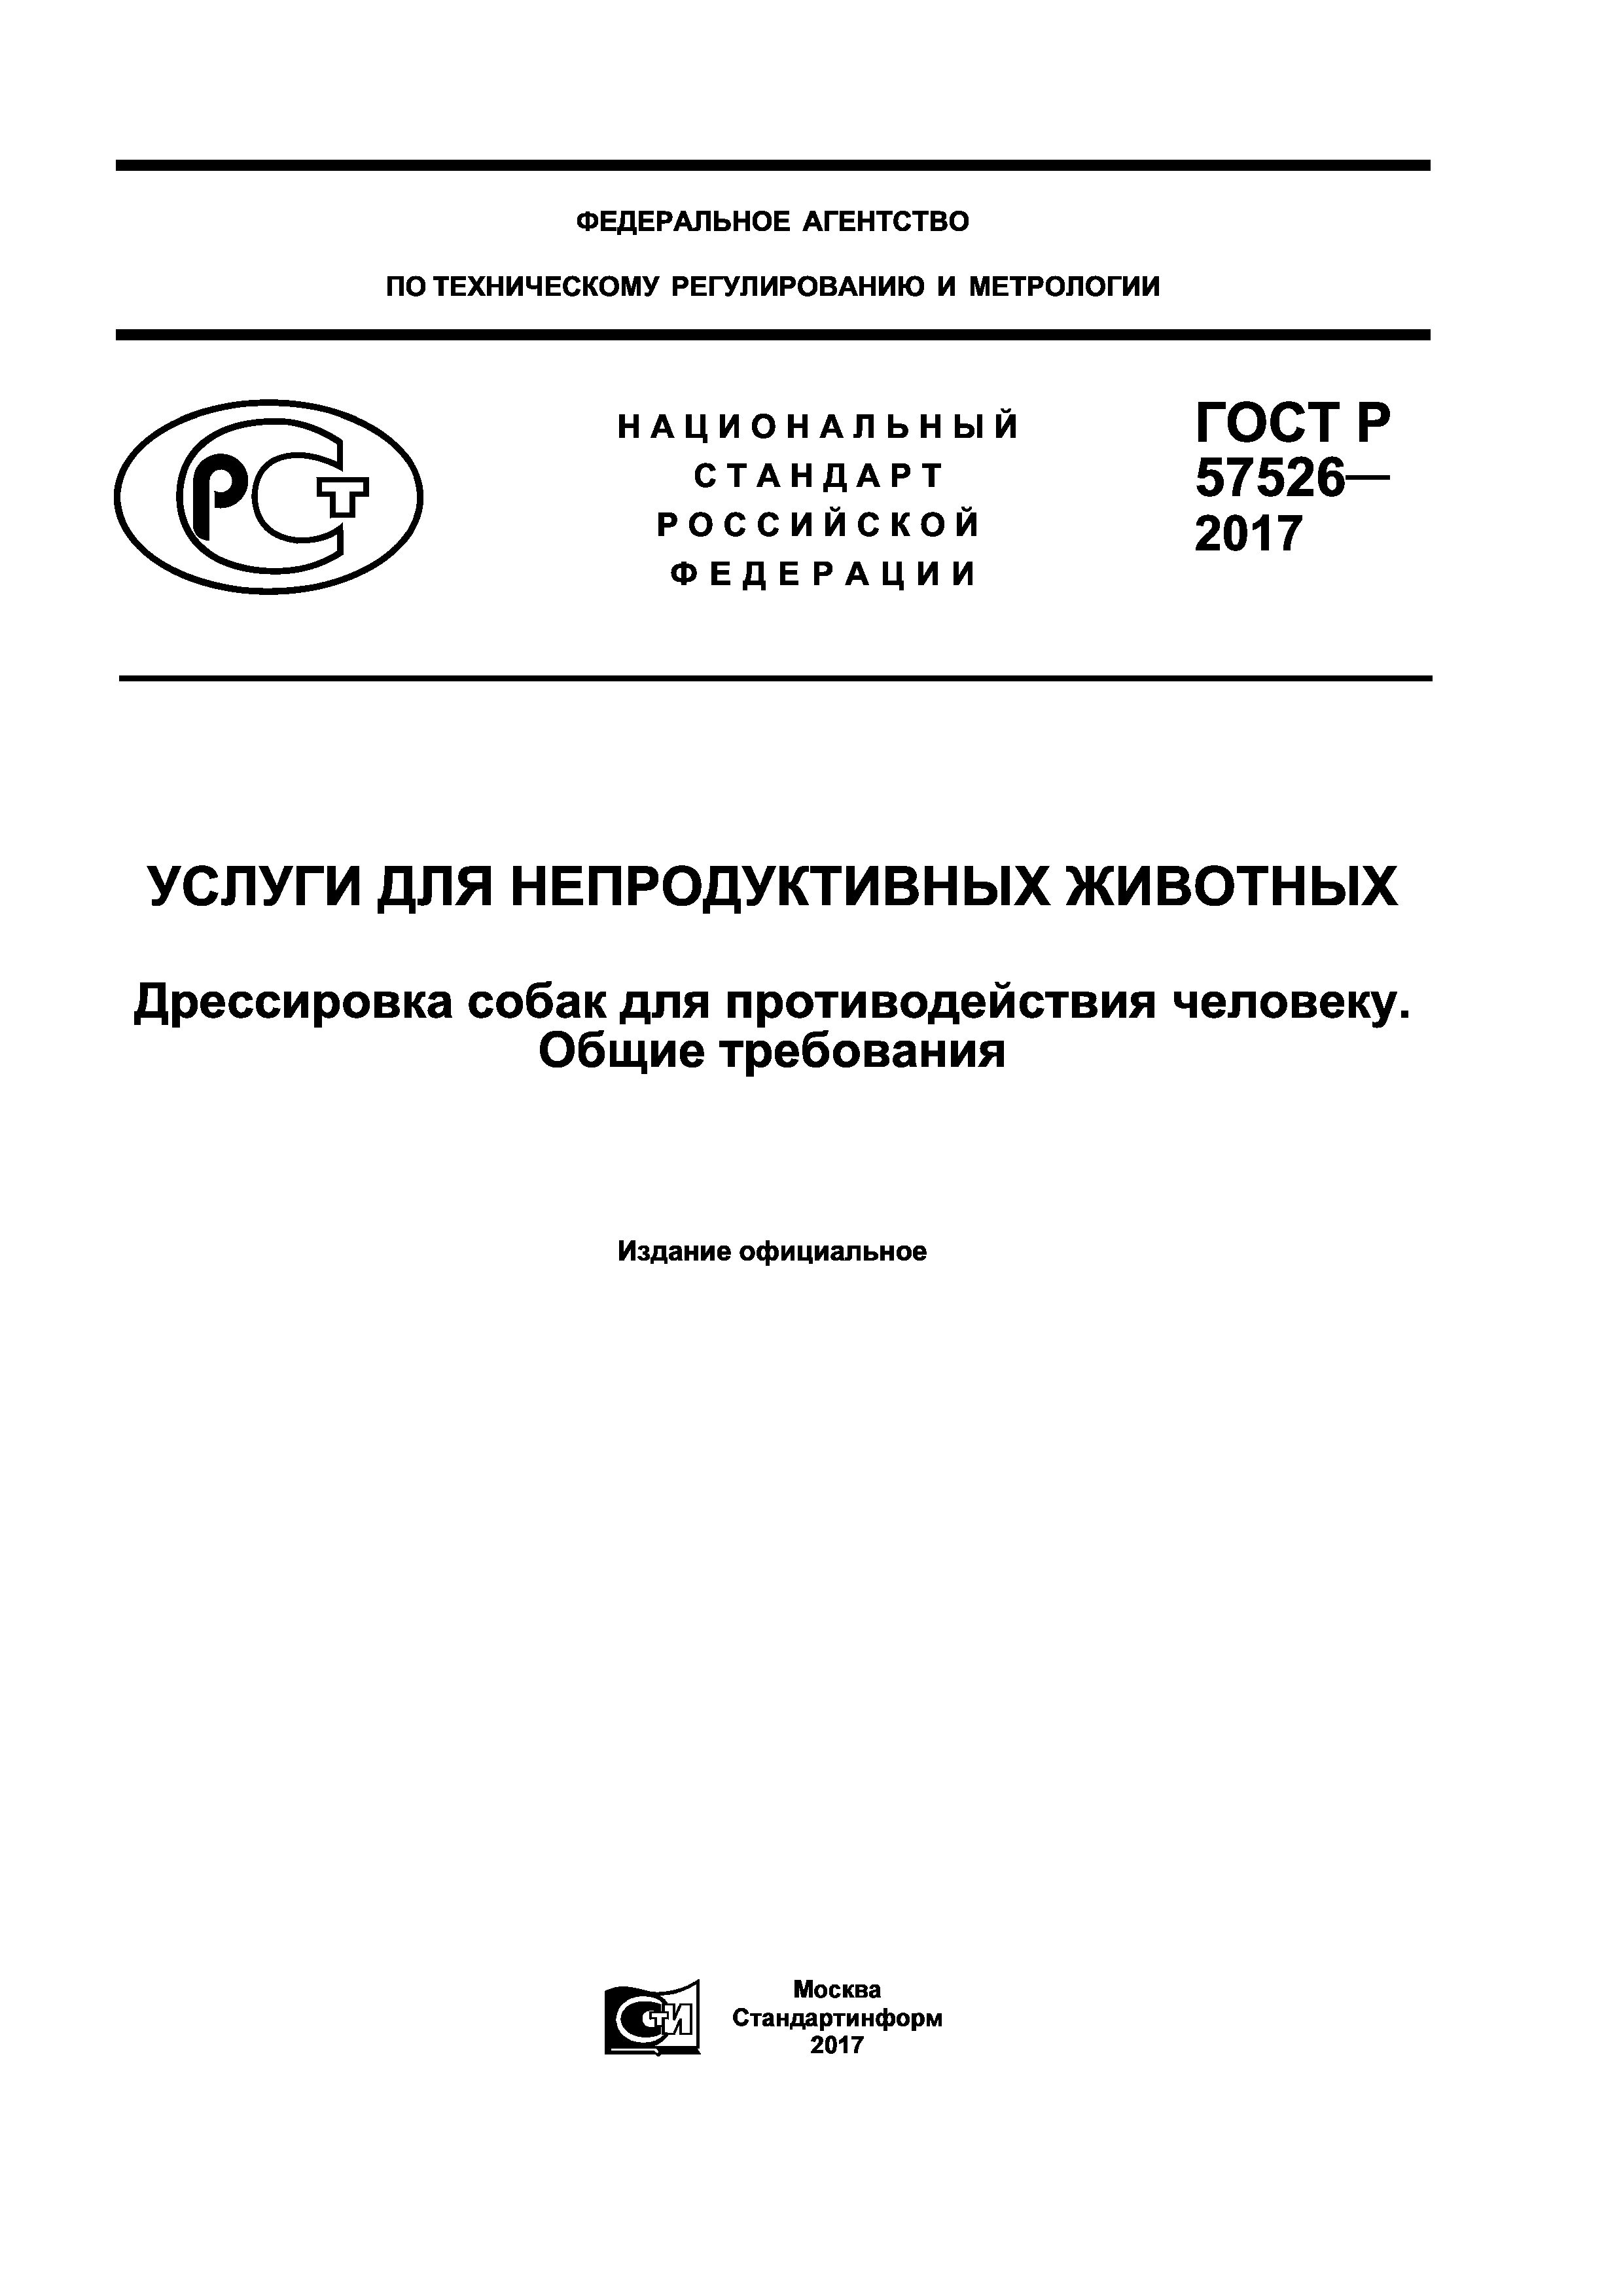 ГОСТ Р 57526-2017